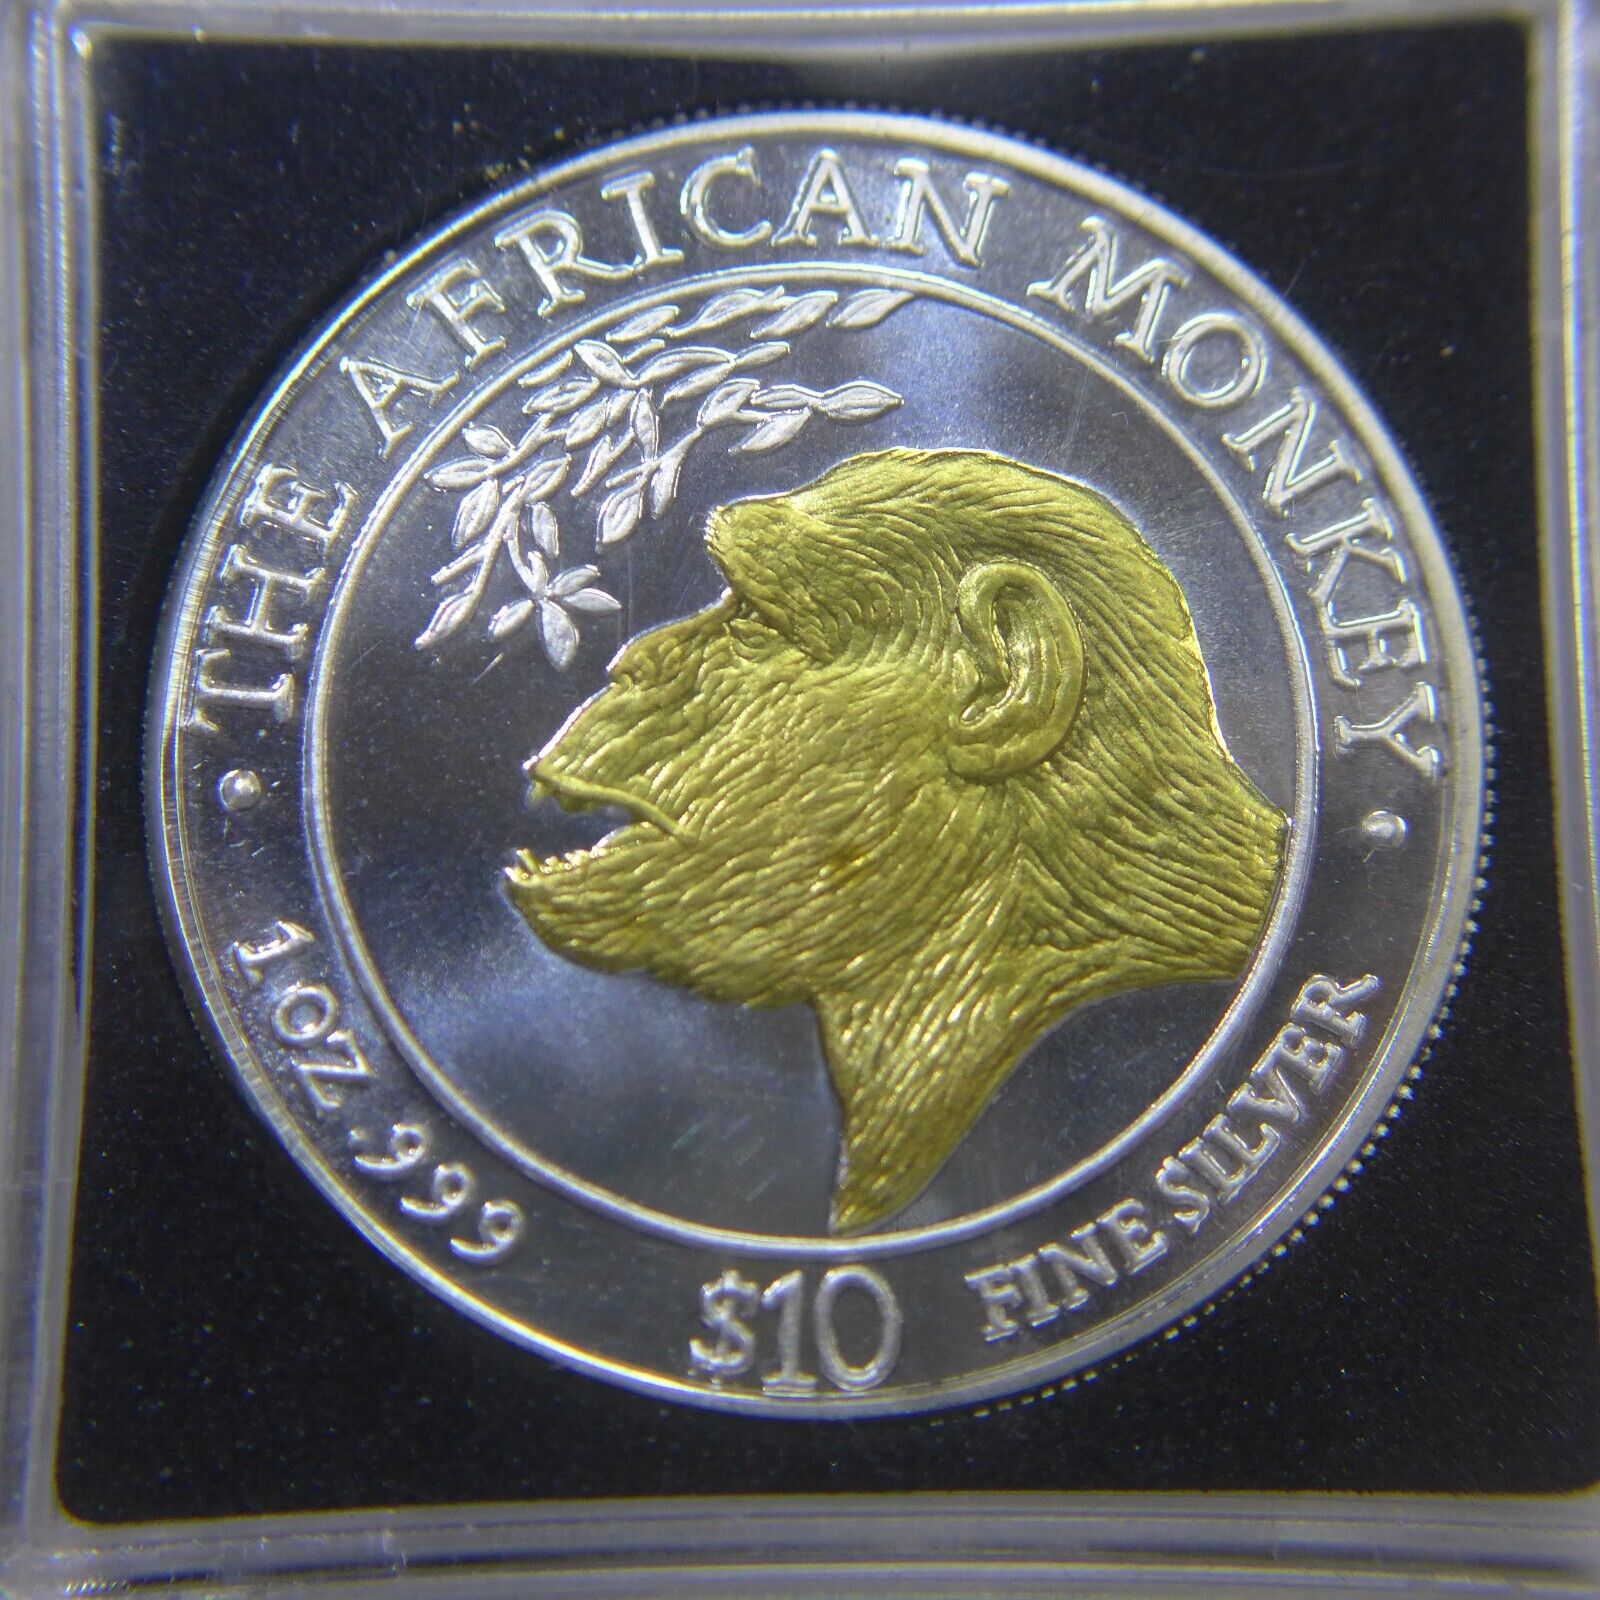 Somalia 1998 $10 Dollars Gilded African Monkey 1 Oz .999 Silver Coin In Capsule